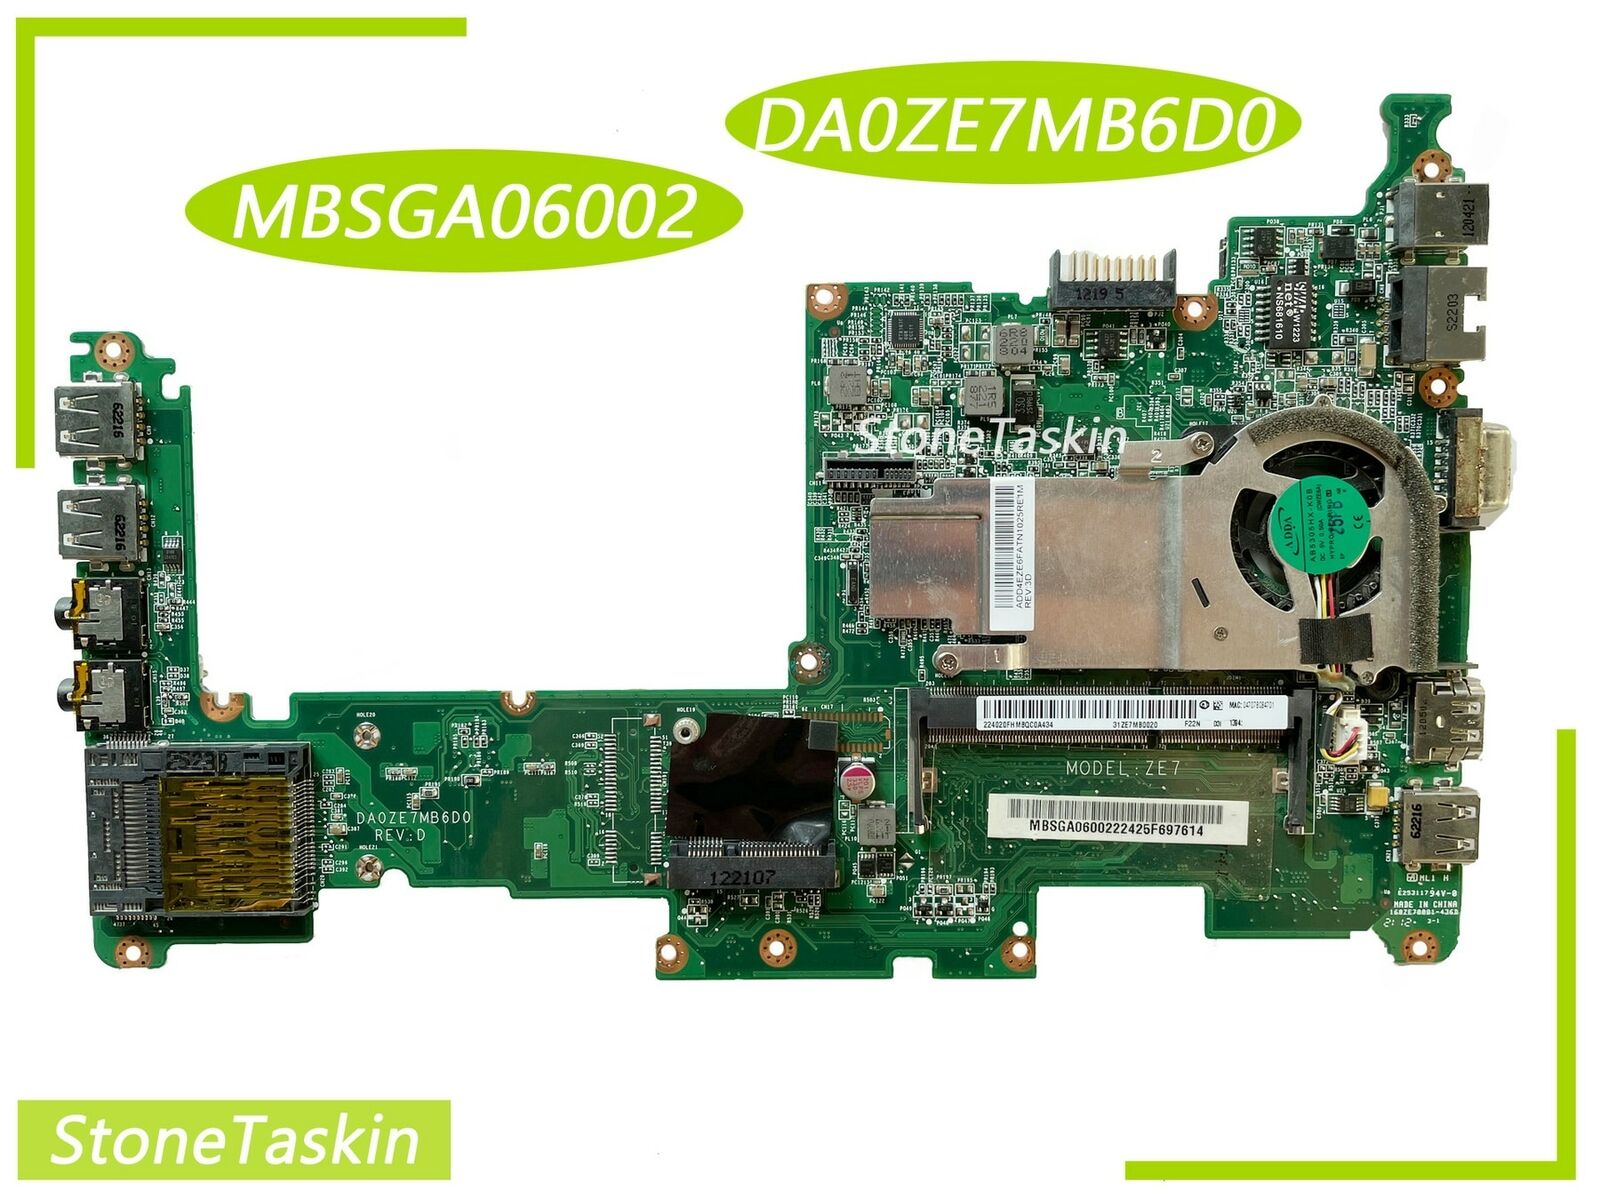 for Acer Aspire One D270 ZE7 Laptop Motherboard DA0ZE7MB6D0 MBSGA06002 DDR3